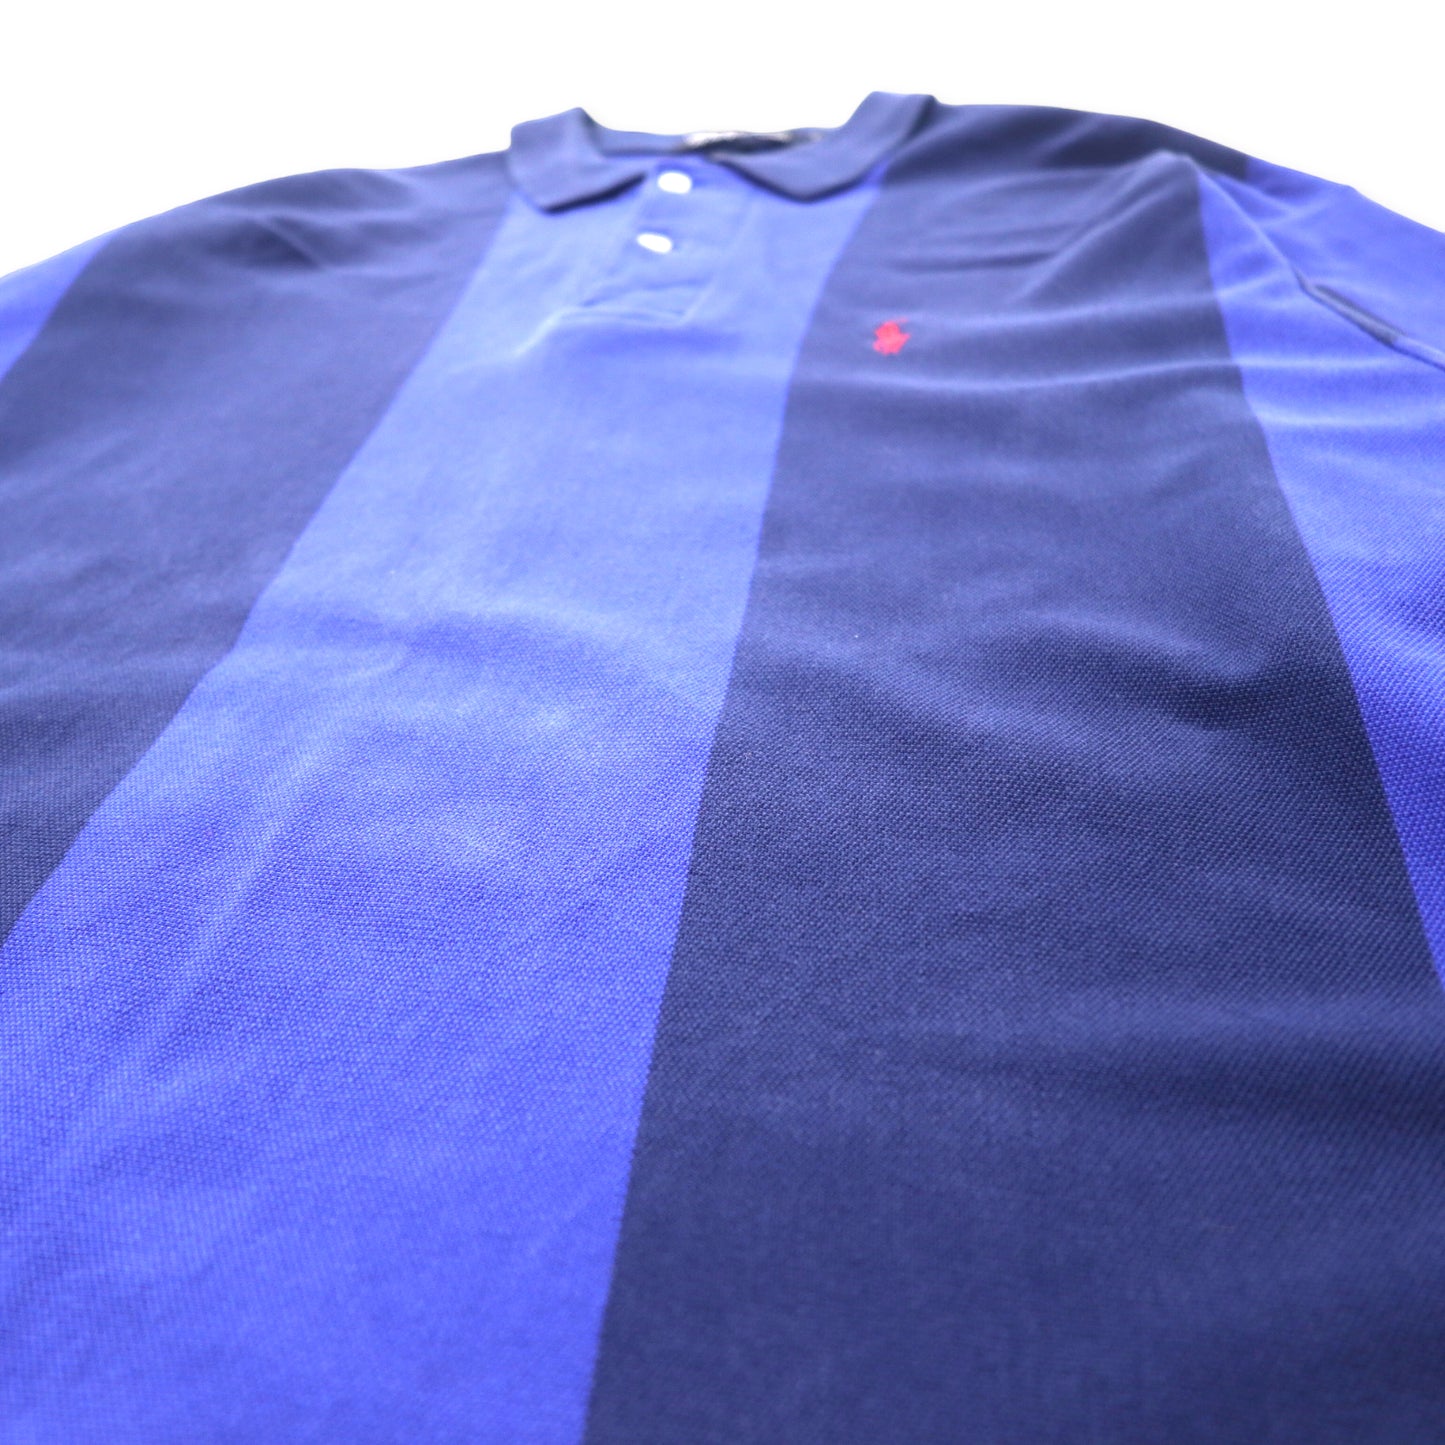 Polo by Ralph Lauren USA製 長袖ポロシャツ ラガーシャツ L ネイビー ブルー ストライプ コットン スモールポニー刺繍 ビッグサイズ